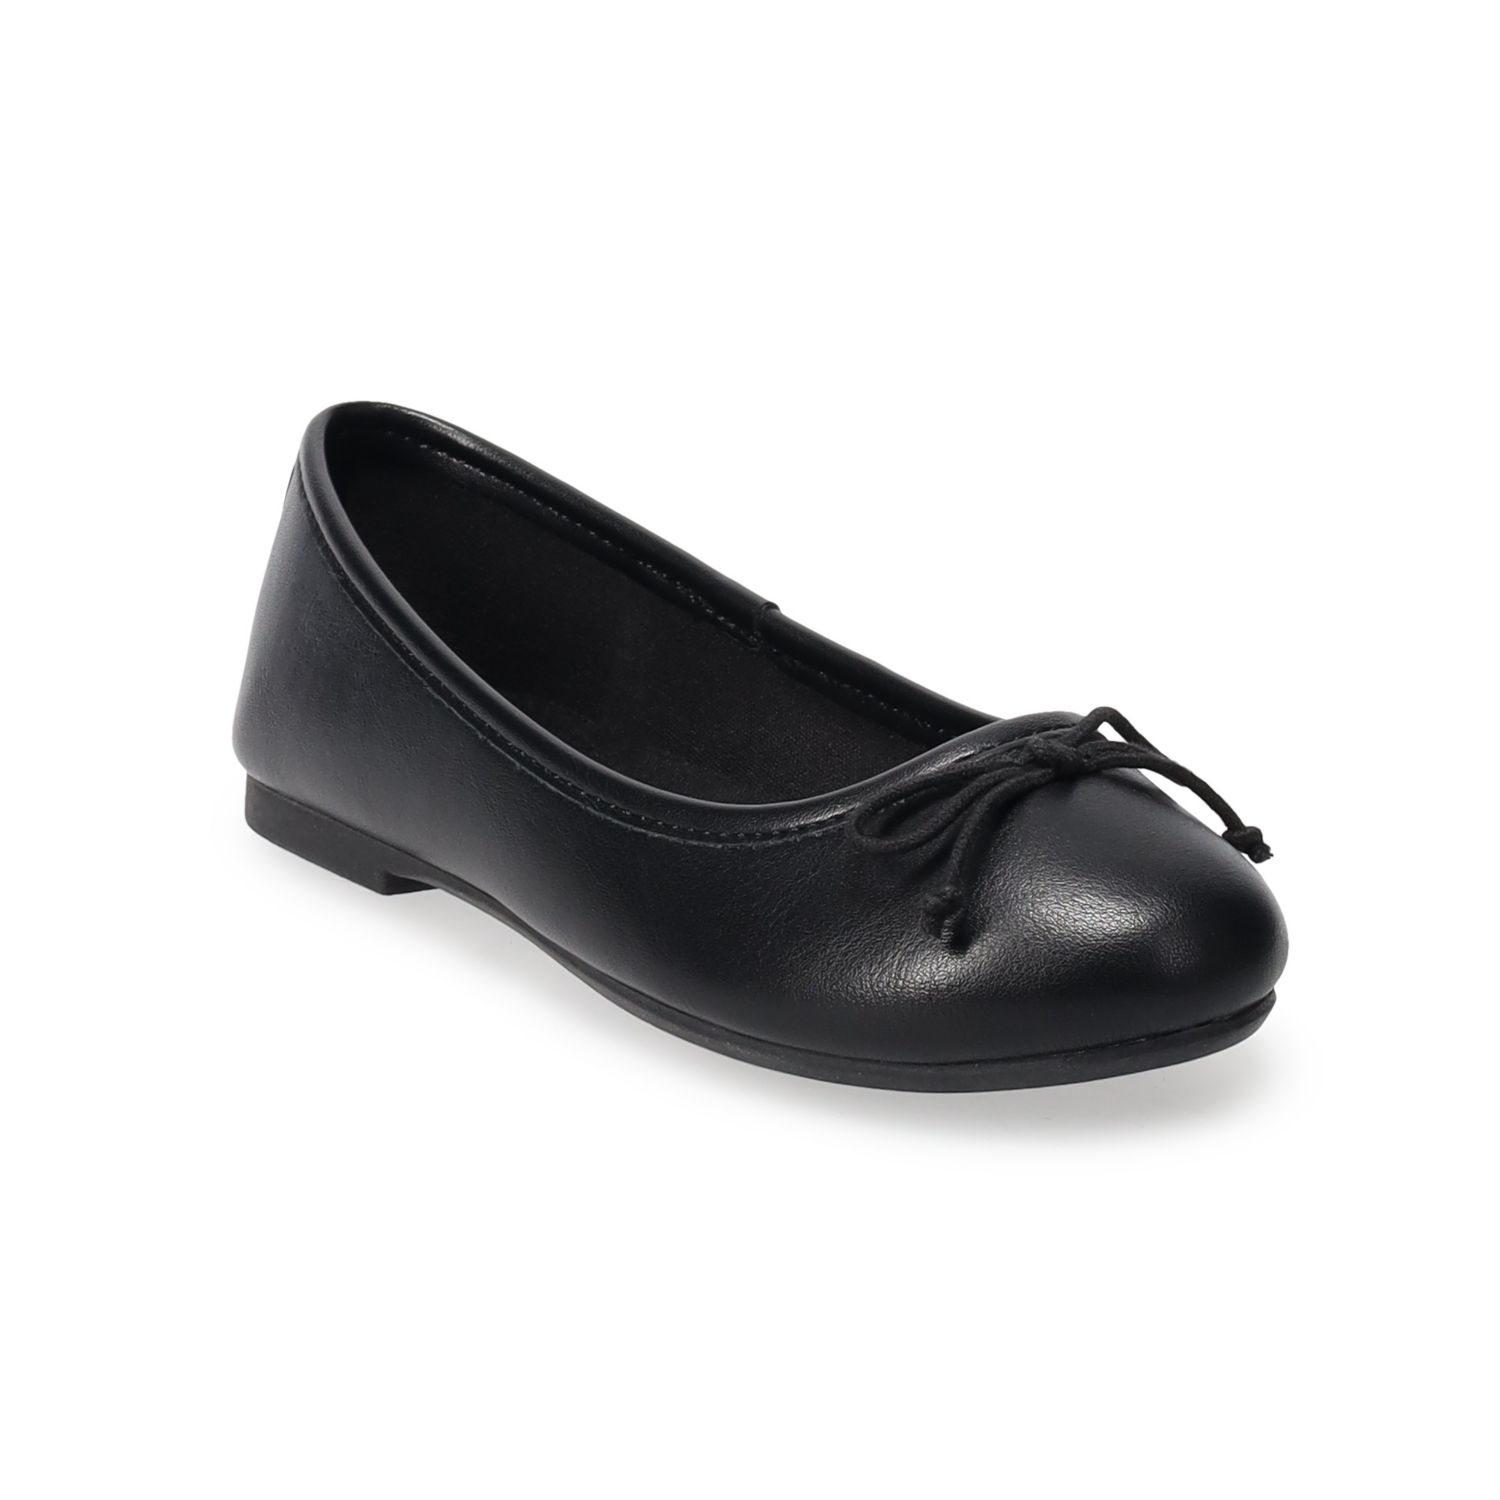 black dress shoes for girls